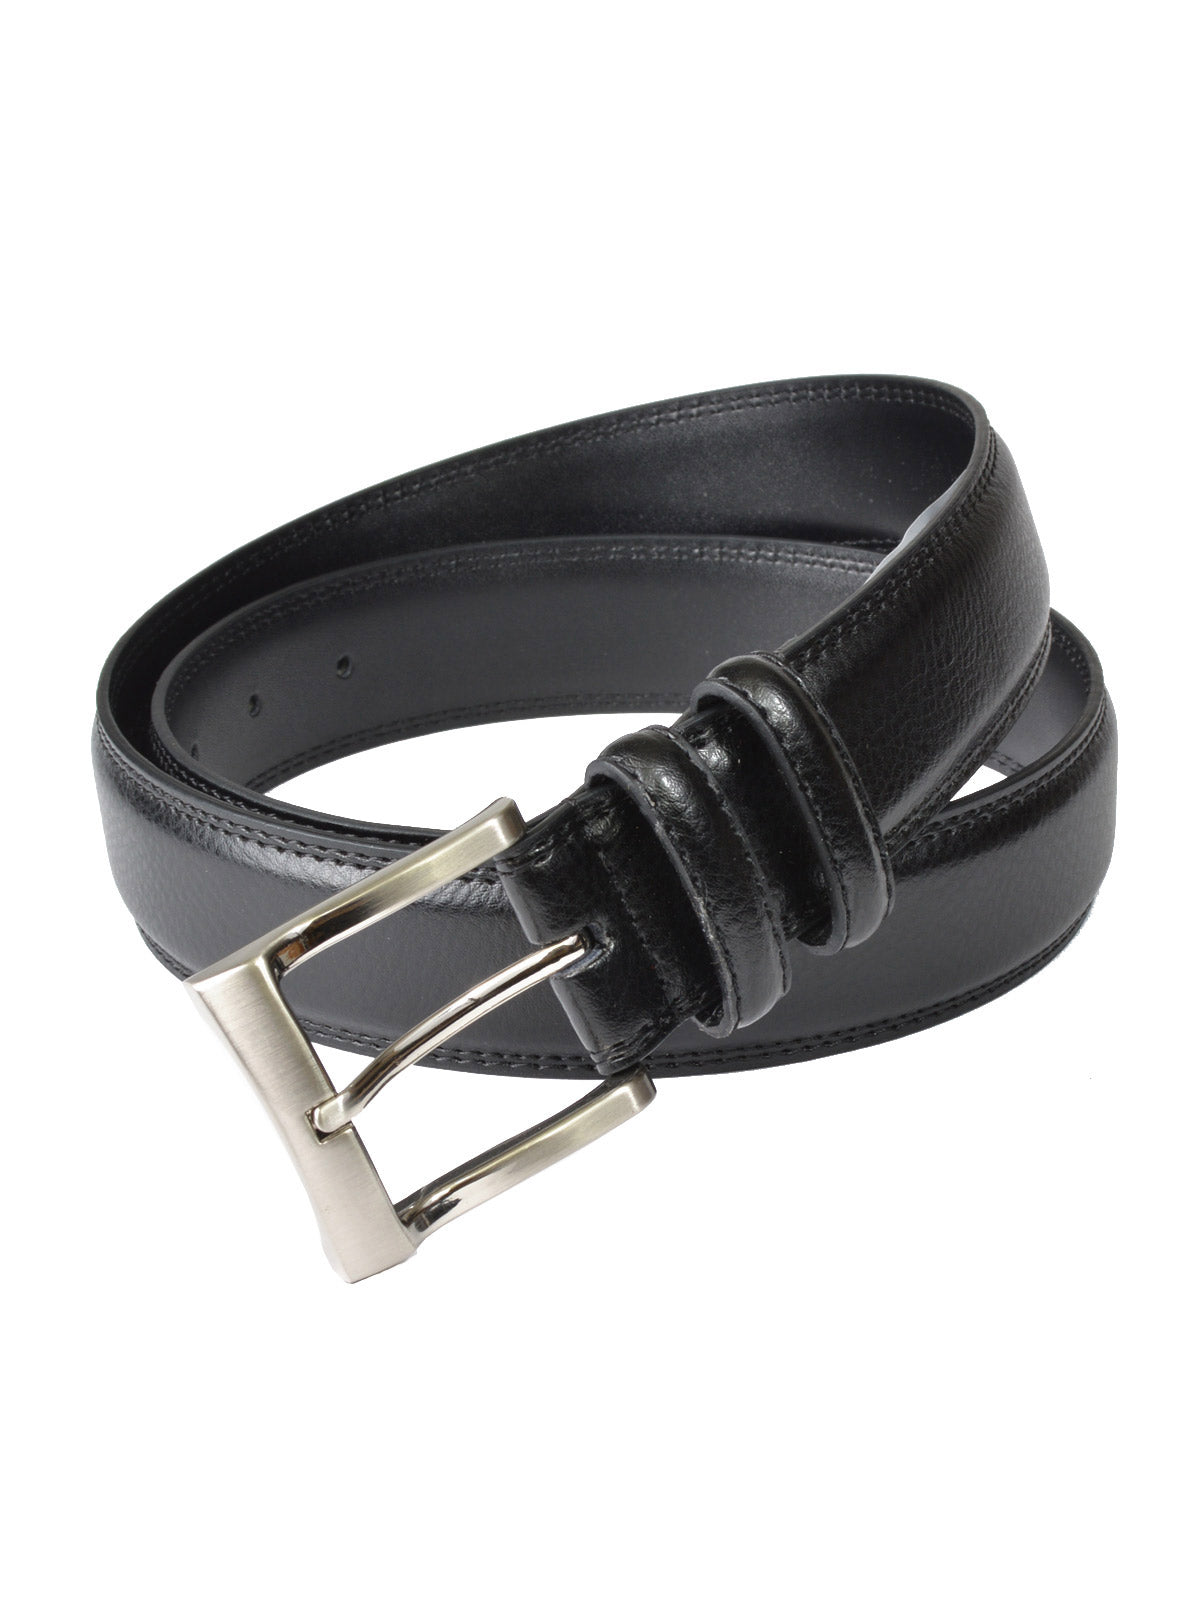 Florsheim Genuine Leather Pebble Grain Dress Belts in Black - Sizes 46 - 56